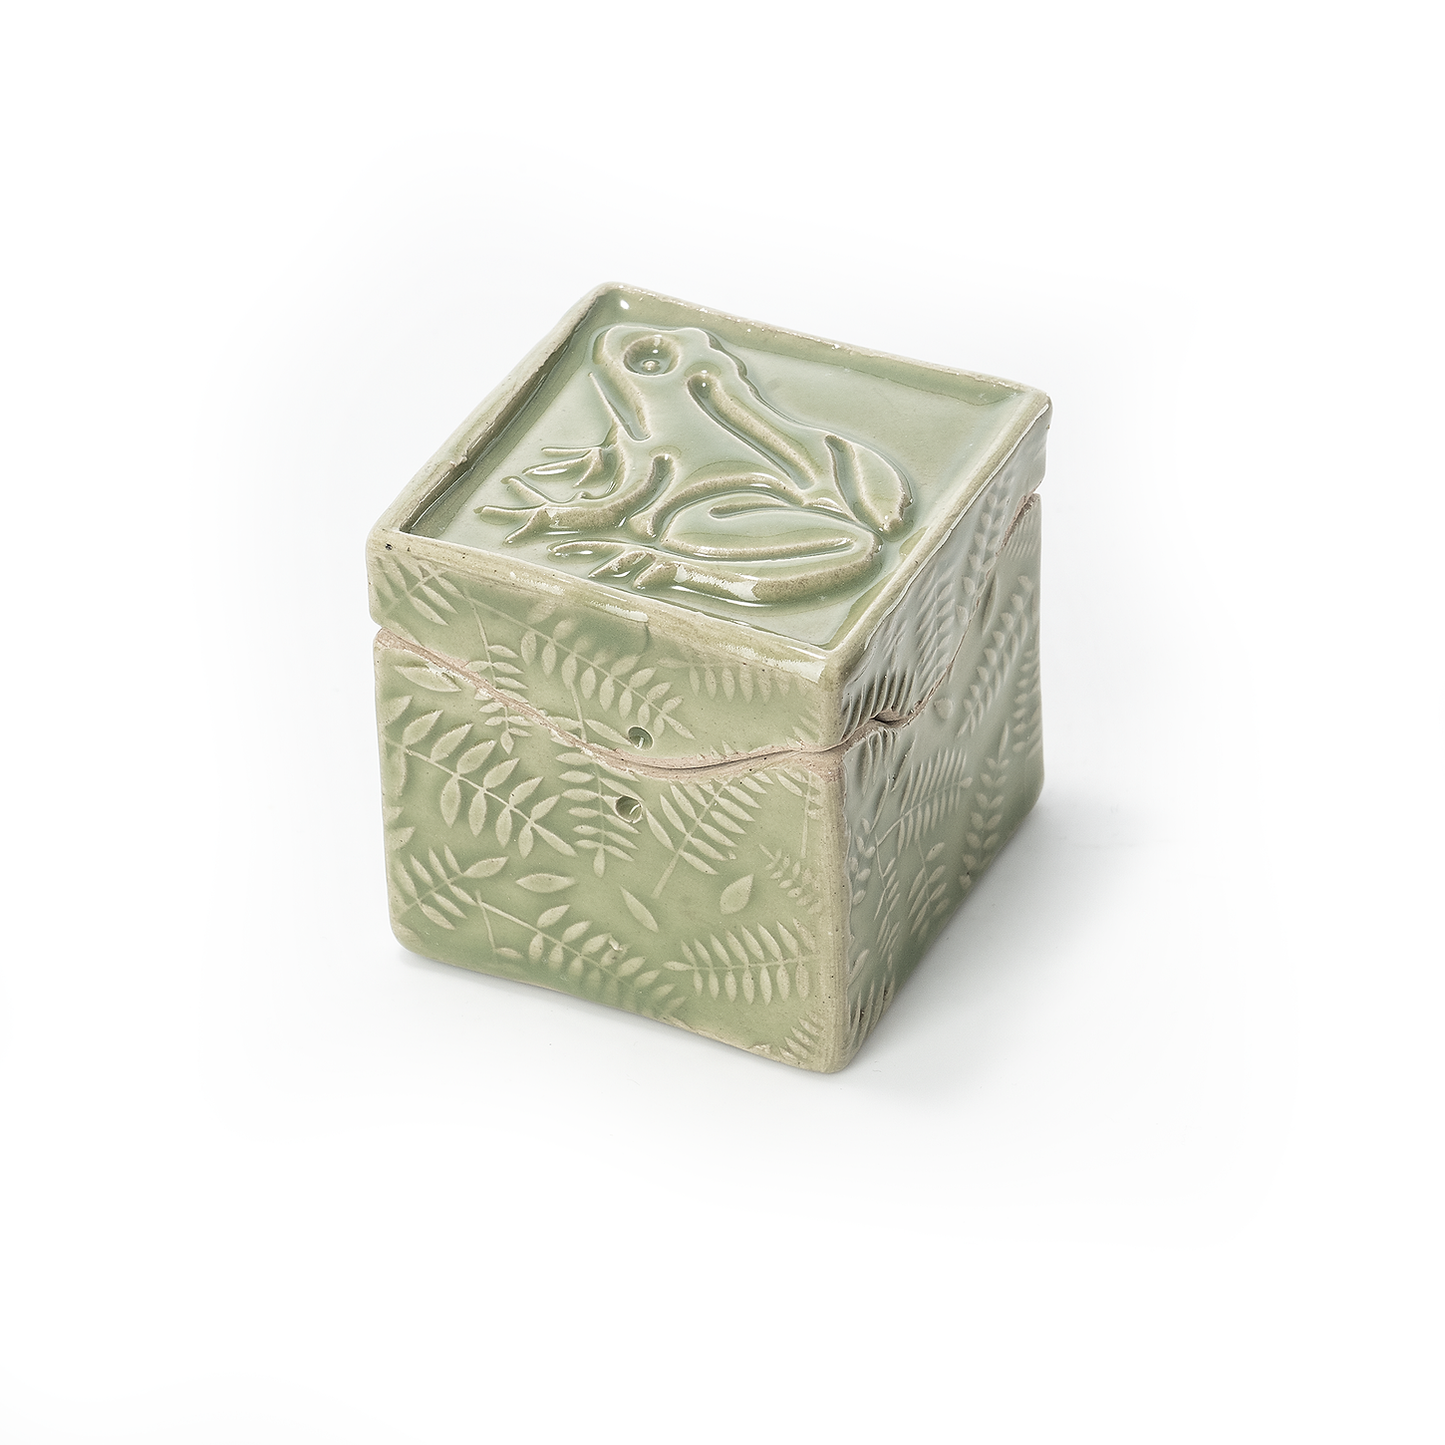 Handmade Ceramic Itty Bitty Box: Leopard Frog